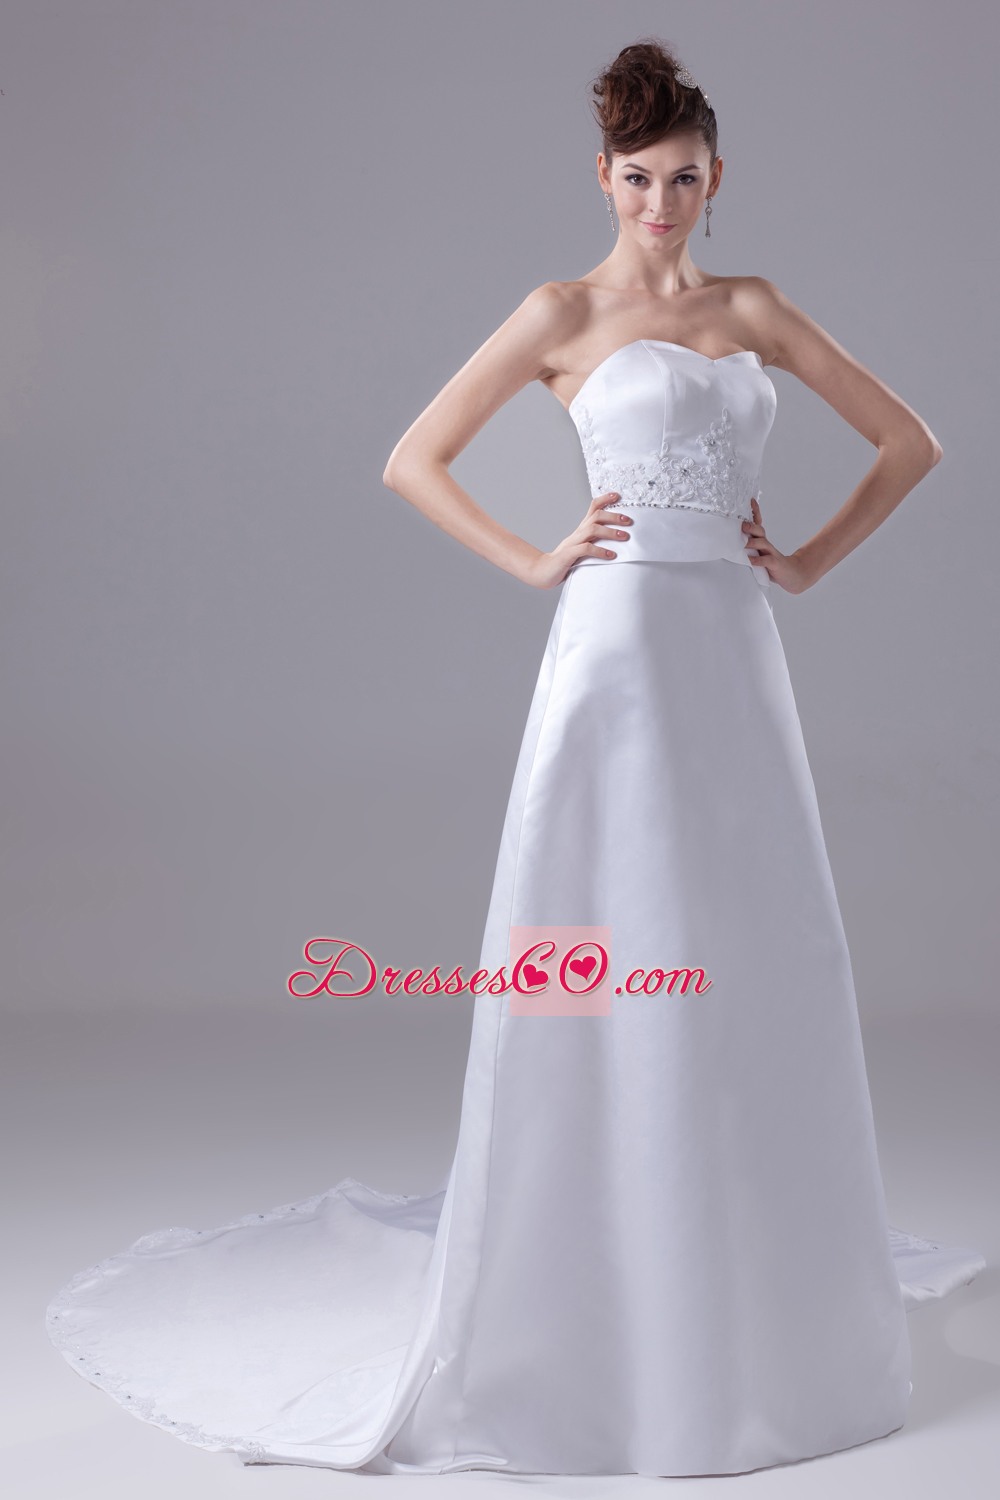 Lace and Beading Watteau Train Wedding Dress